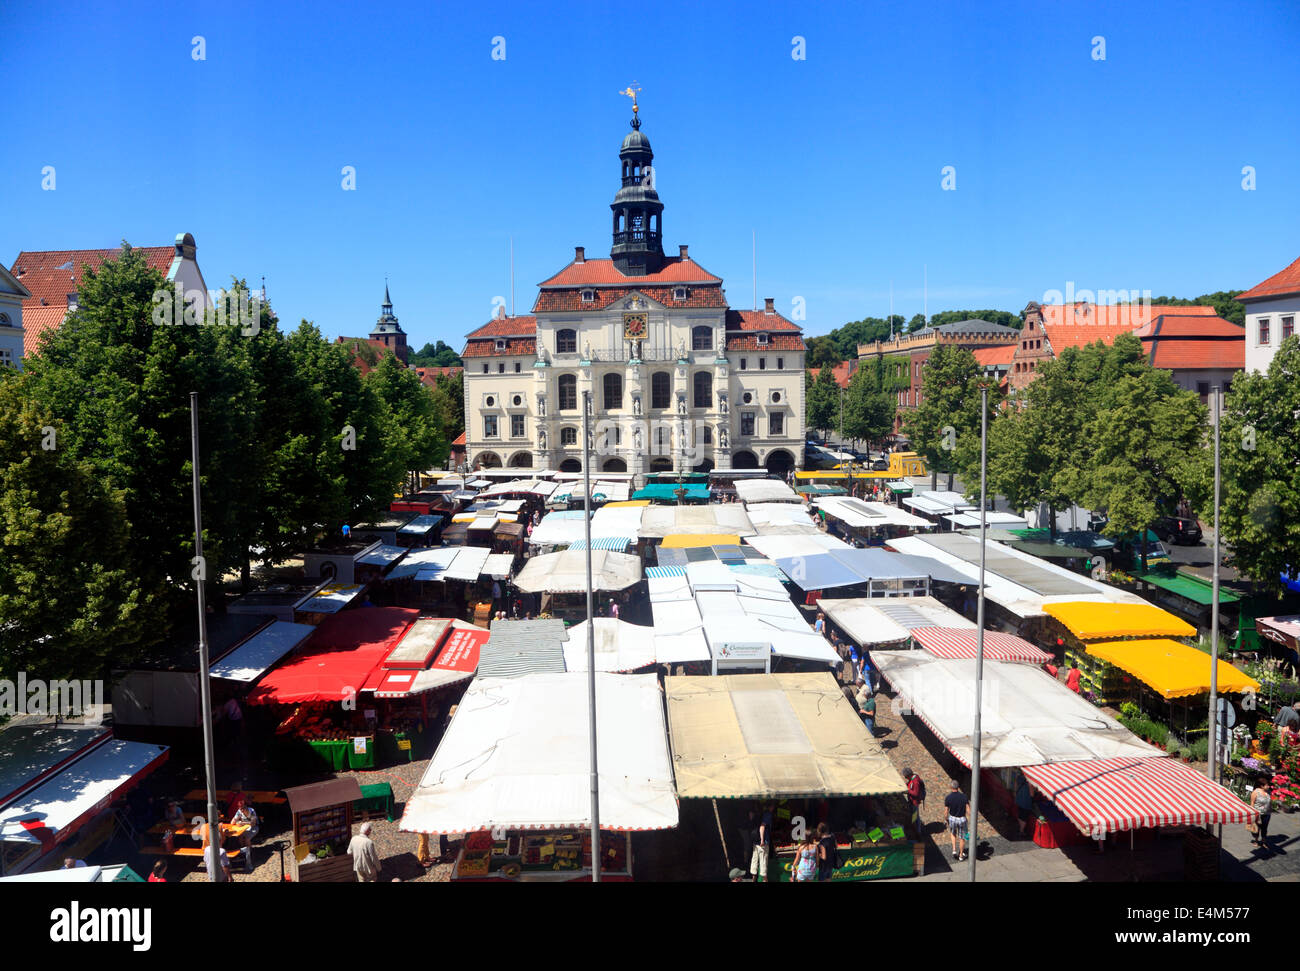 Weekley market in front of town hall, Lueneburg,  Lüneburg, Lower Saxony, Germany, Europe Stock Photo